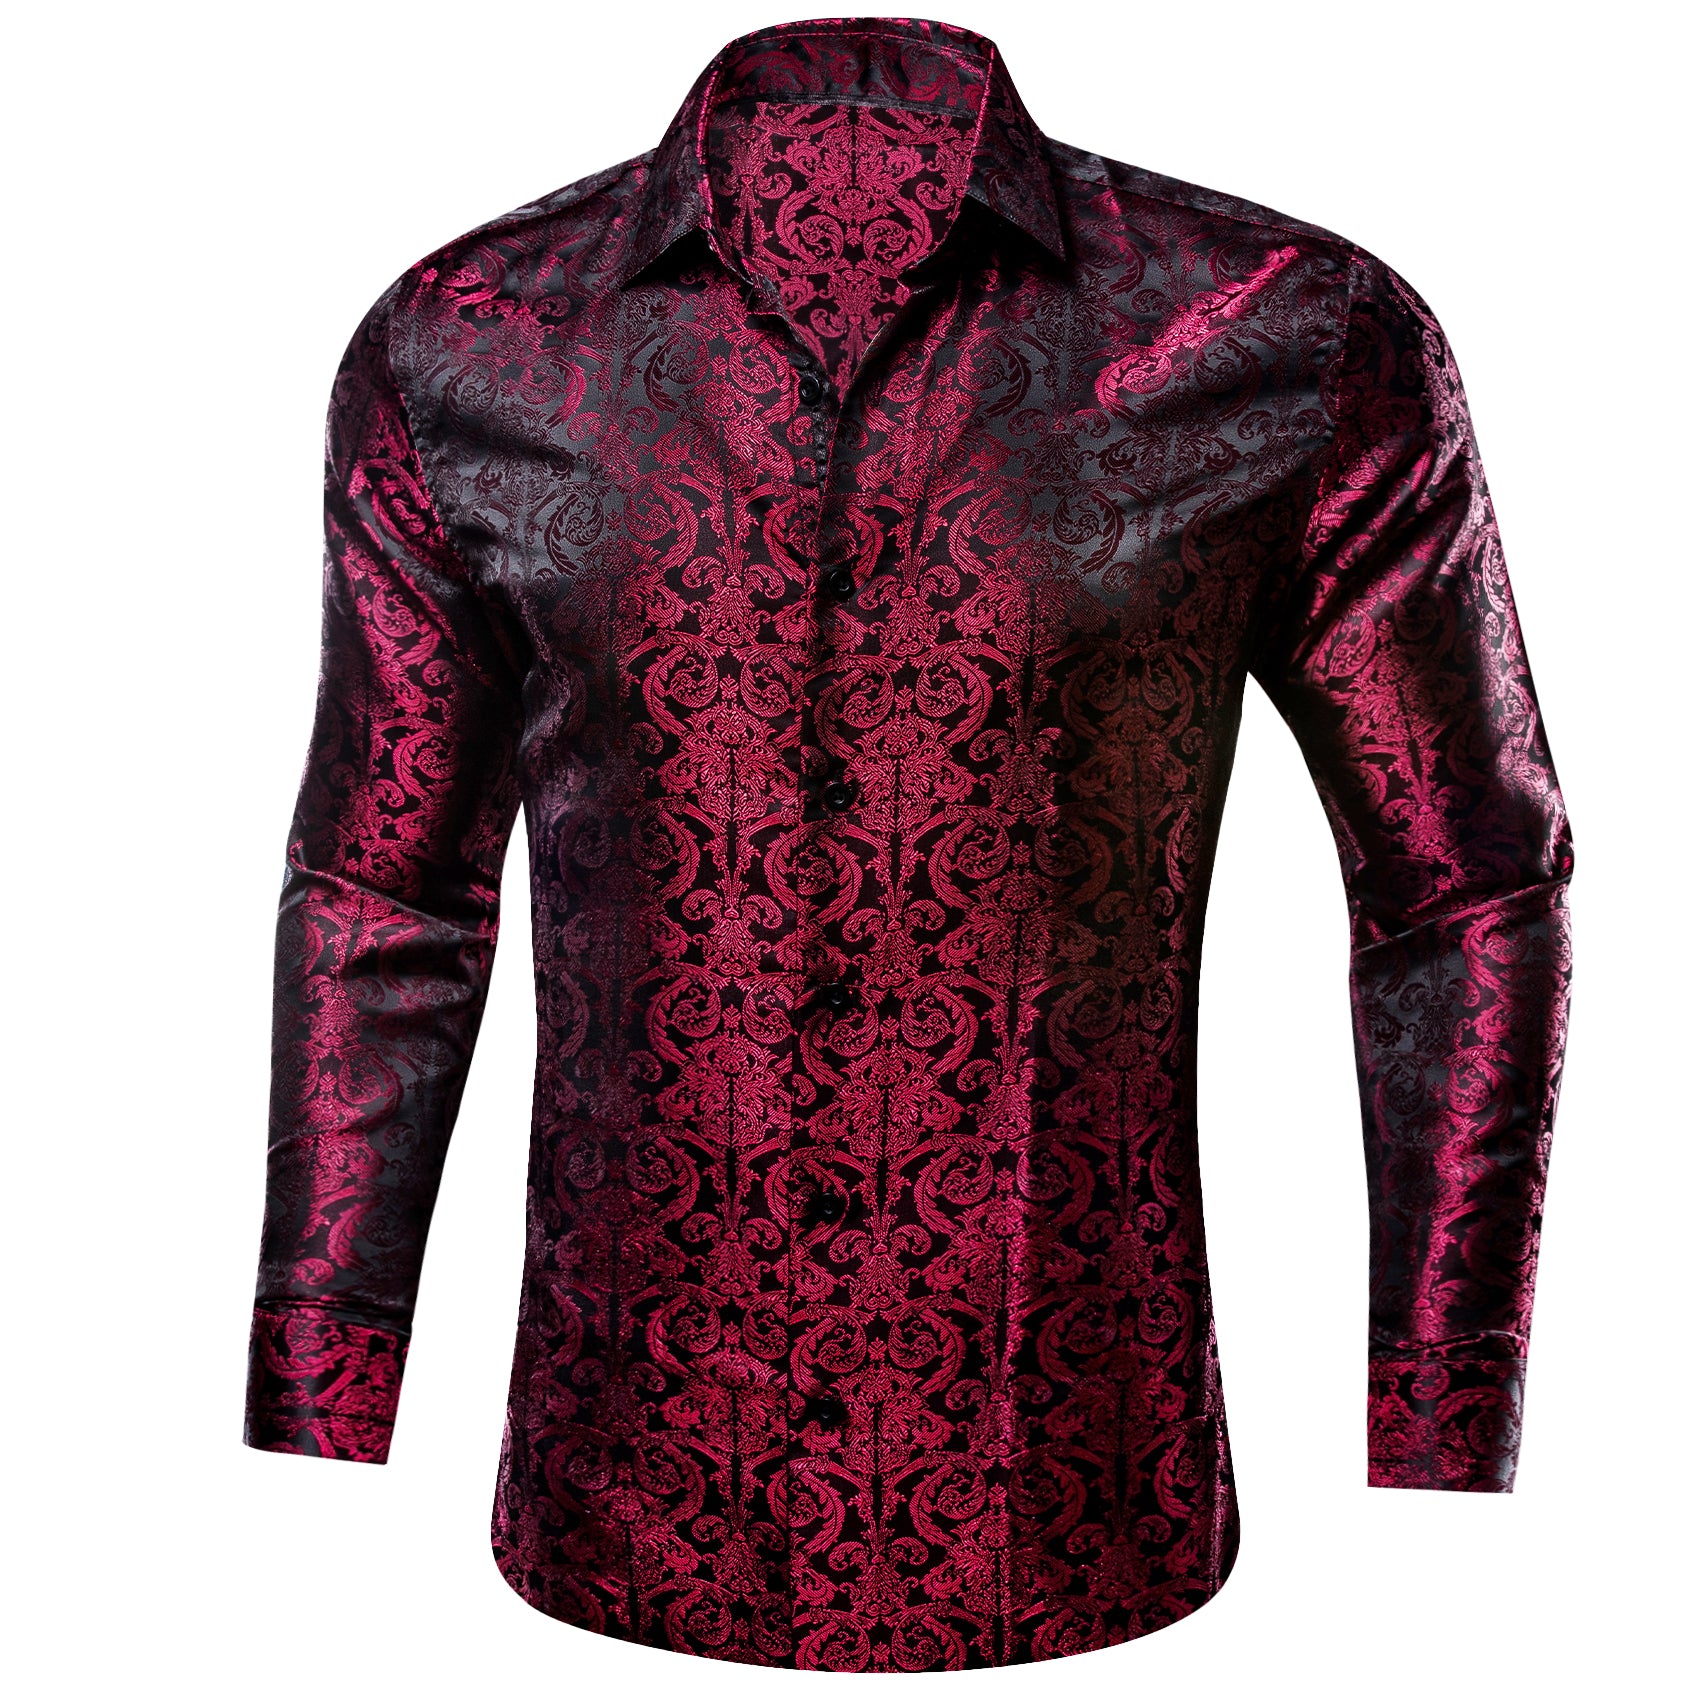 Barry.wang Luxury Rust Red Paisley Silk Shirt